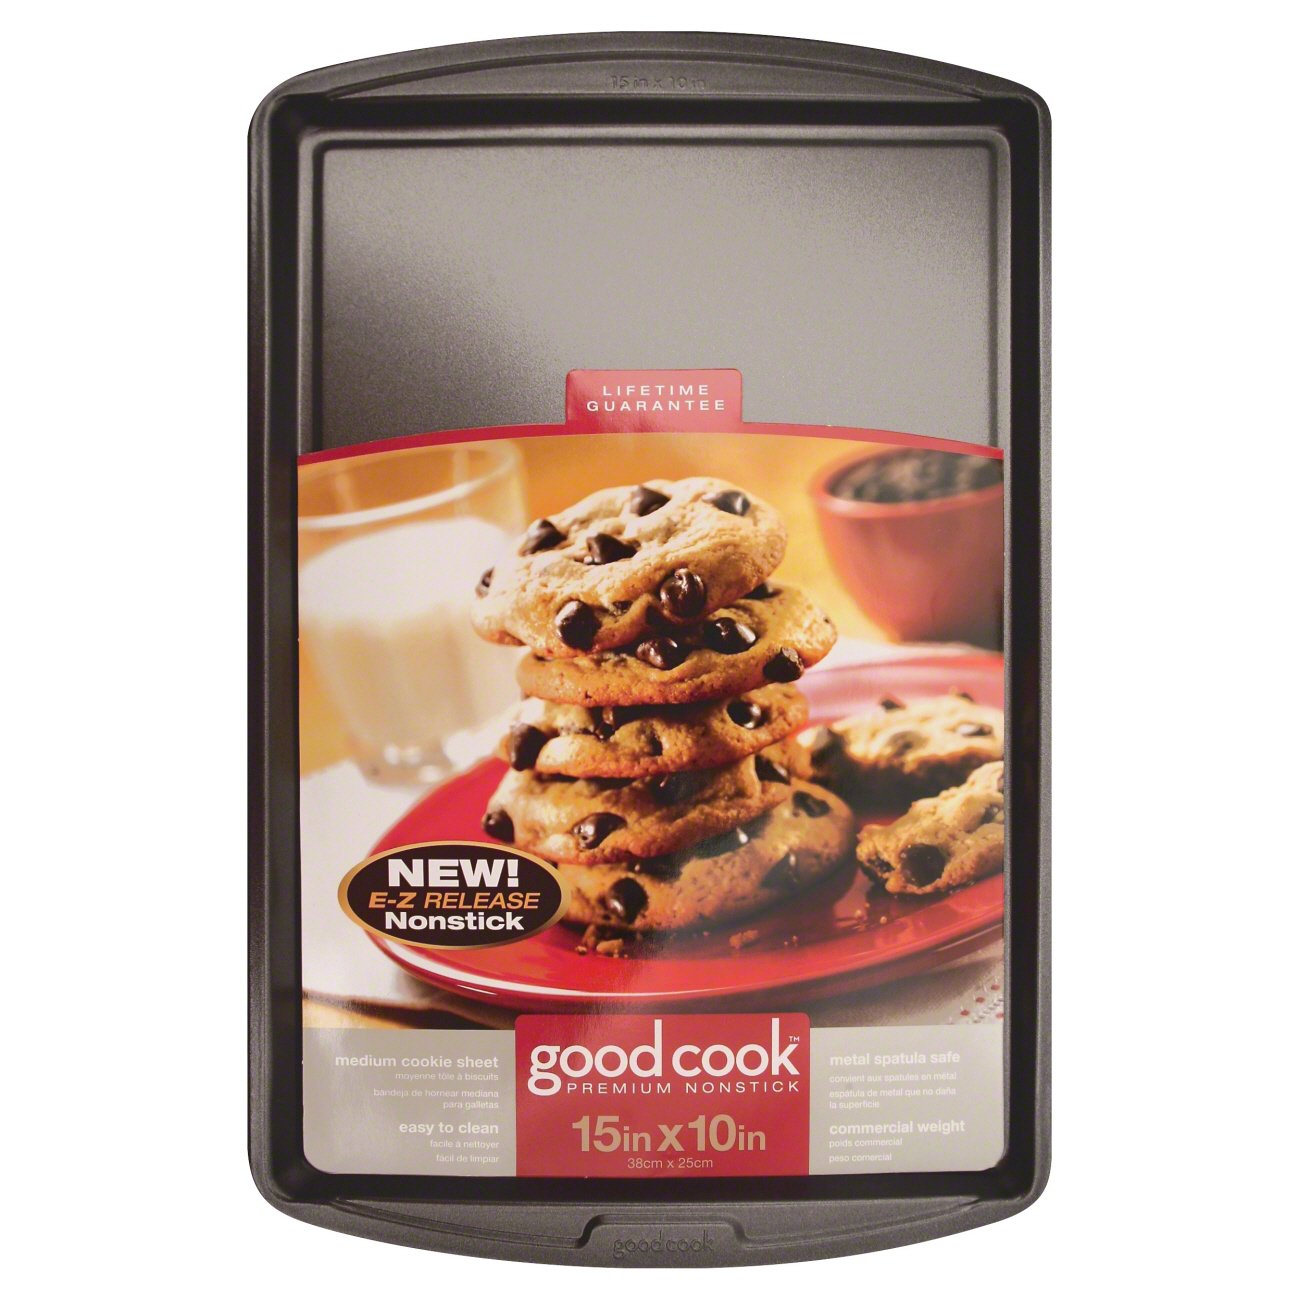 Good Cook Good Cook Medium Cookie Sheet - Shop Pans & Dishes at H-E-B